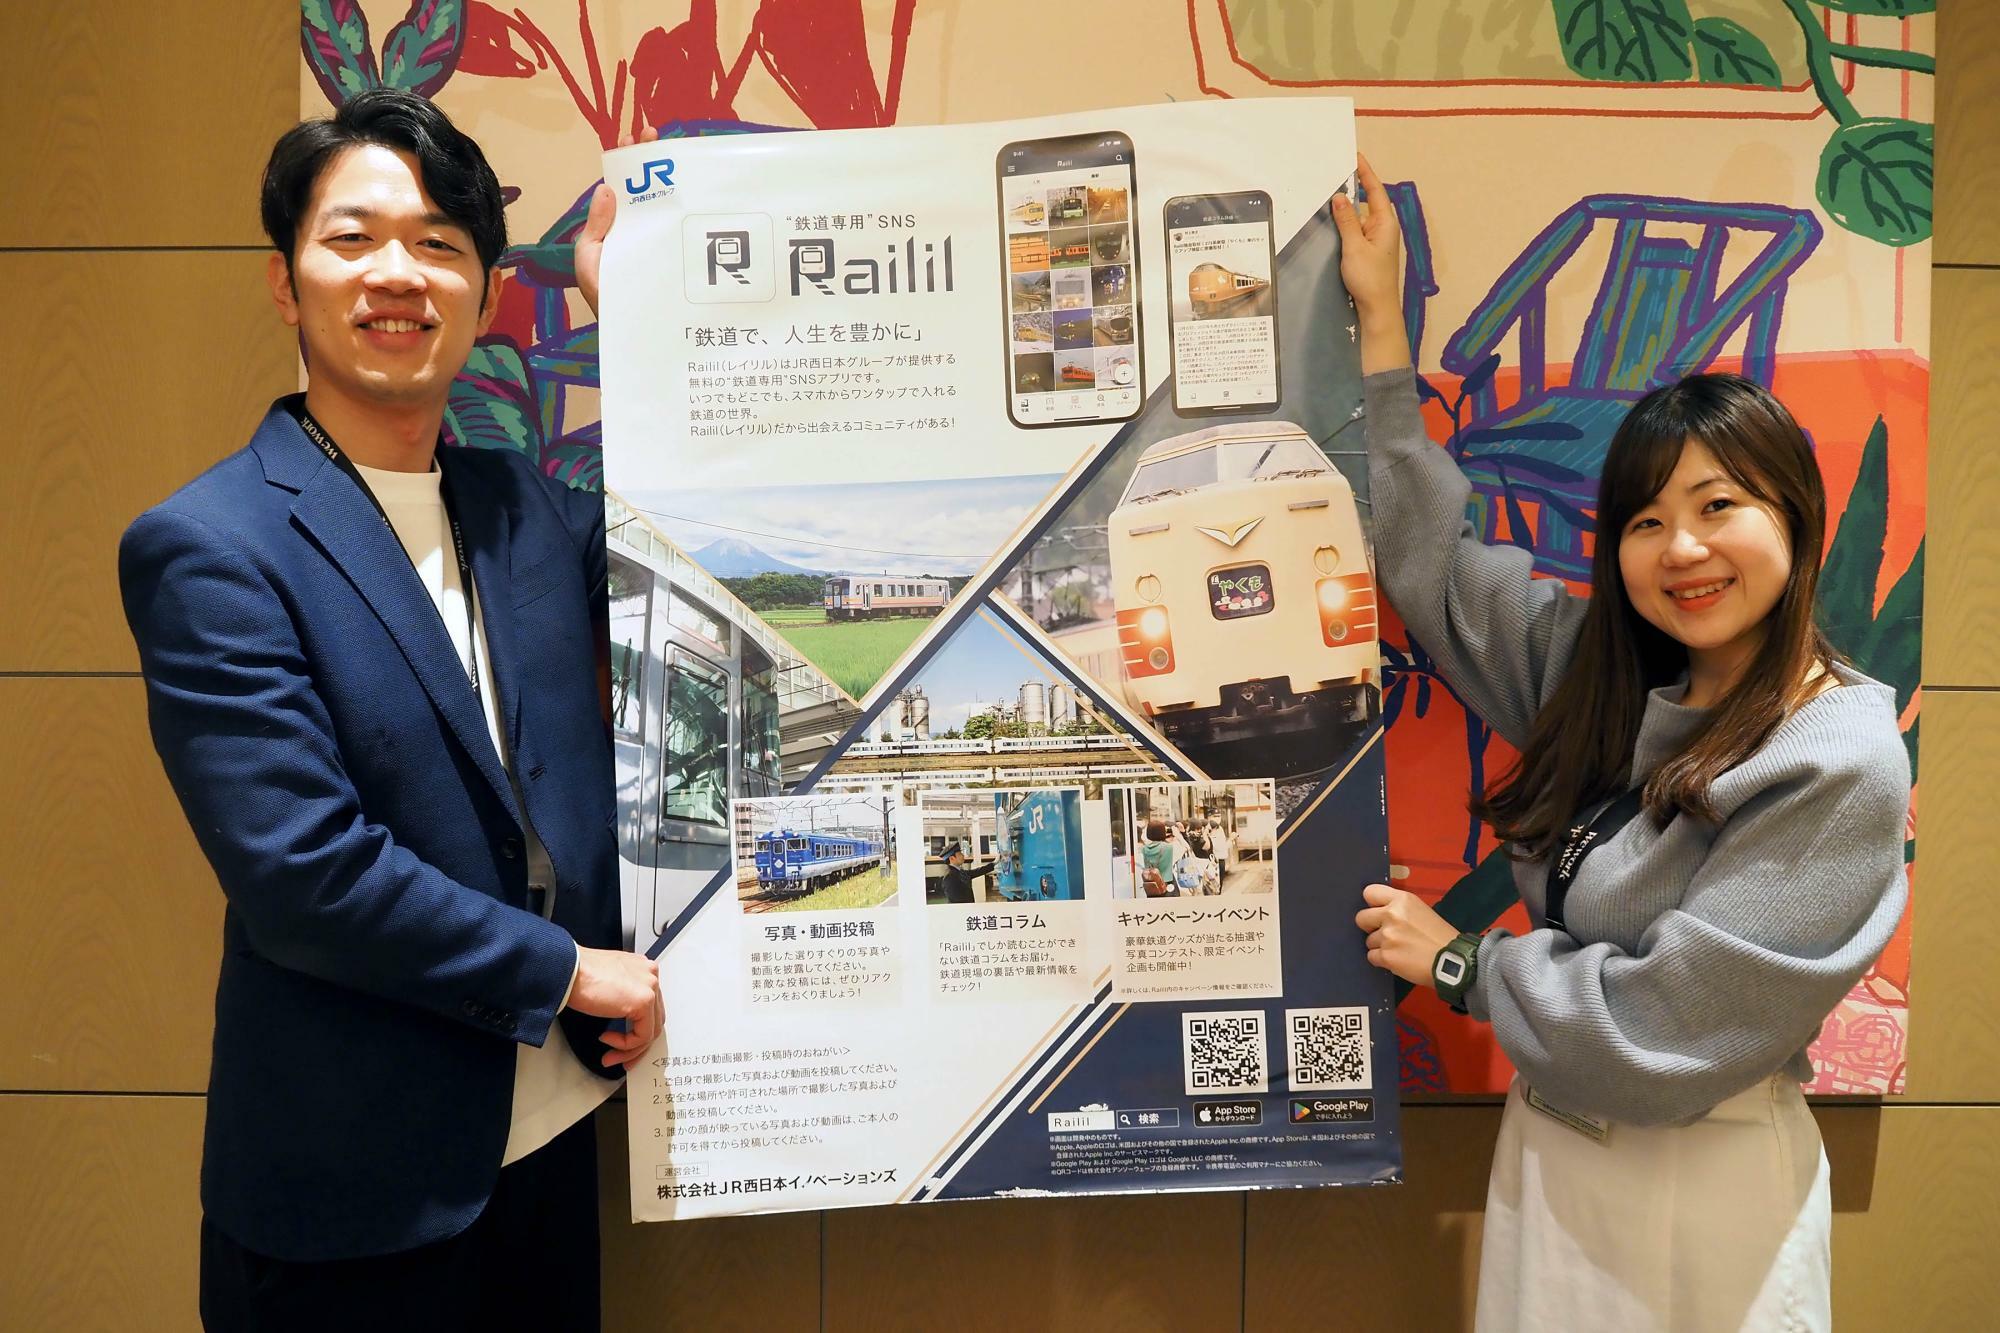 「Railil」運営スタッフの鳥家さん（左）と岩嶋さん。鉄道会社とファンをつなぐ”最前線”に立つ（特記以外の写真は筆者撮影）